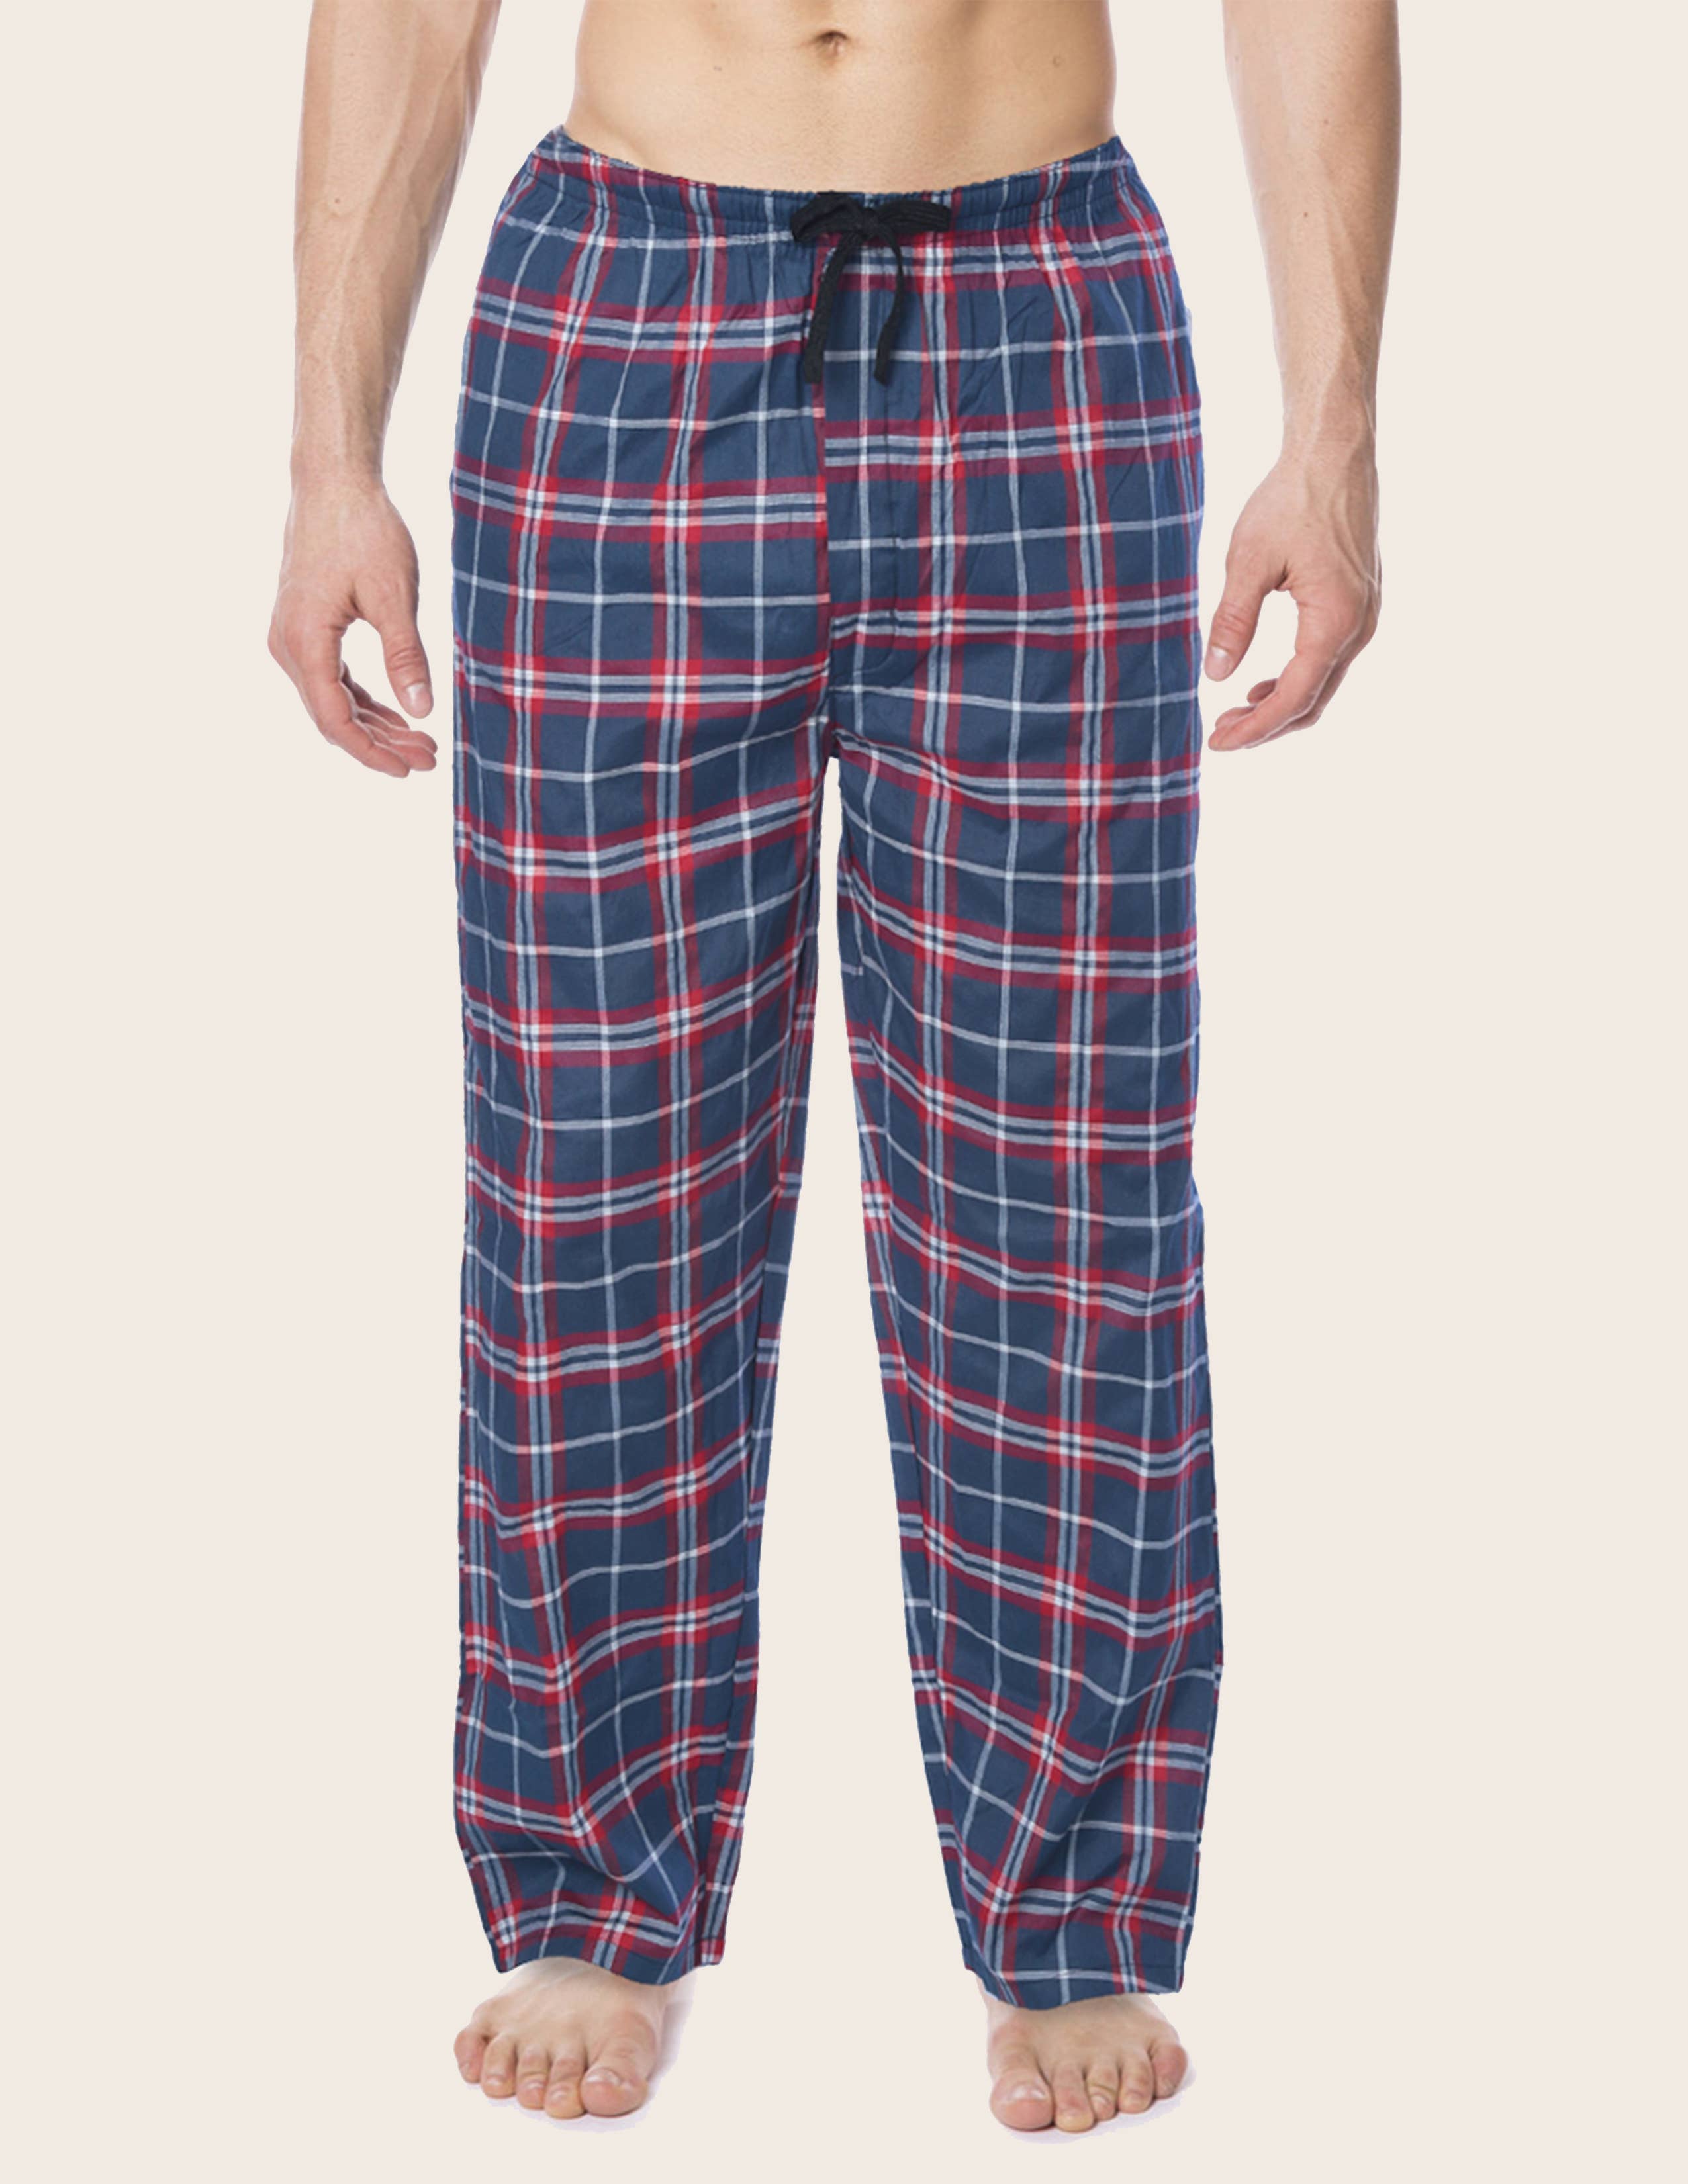 Pyjamas for Men: Buy Lounge Pants for Men Online at Best Price | Jockey  India